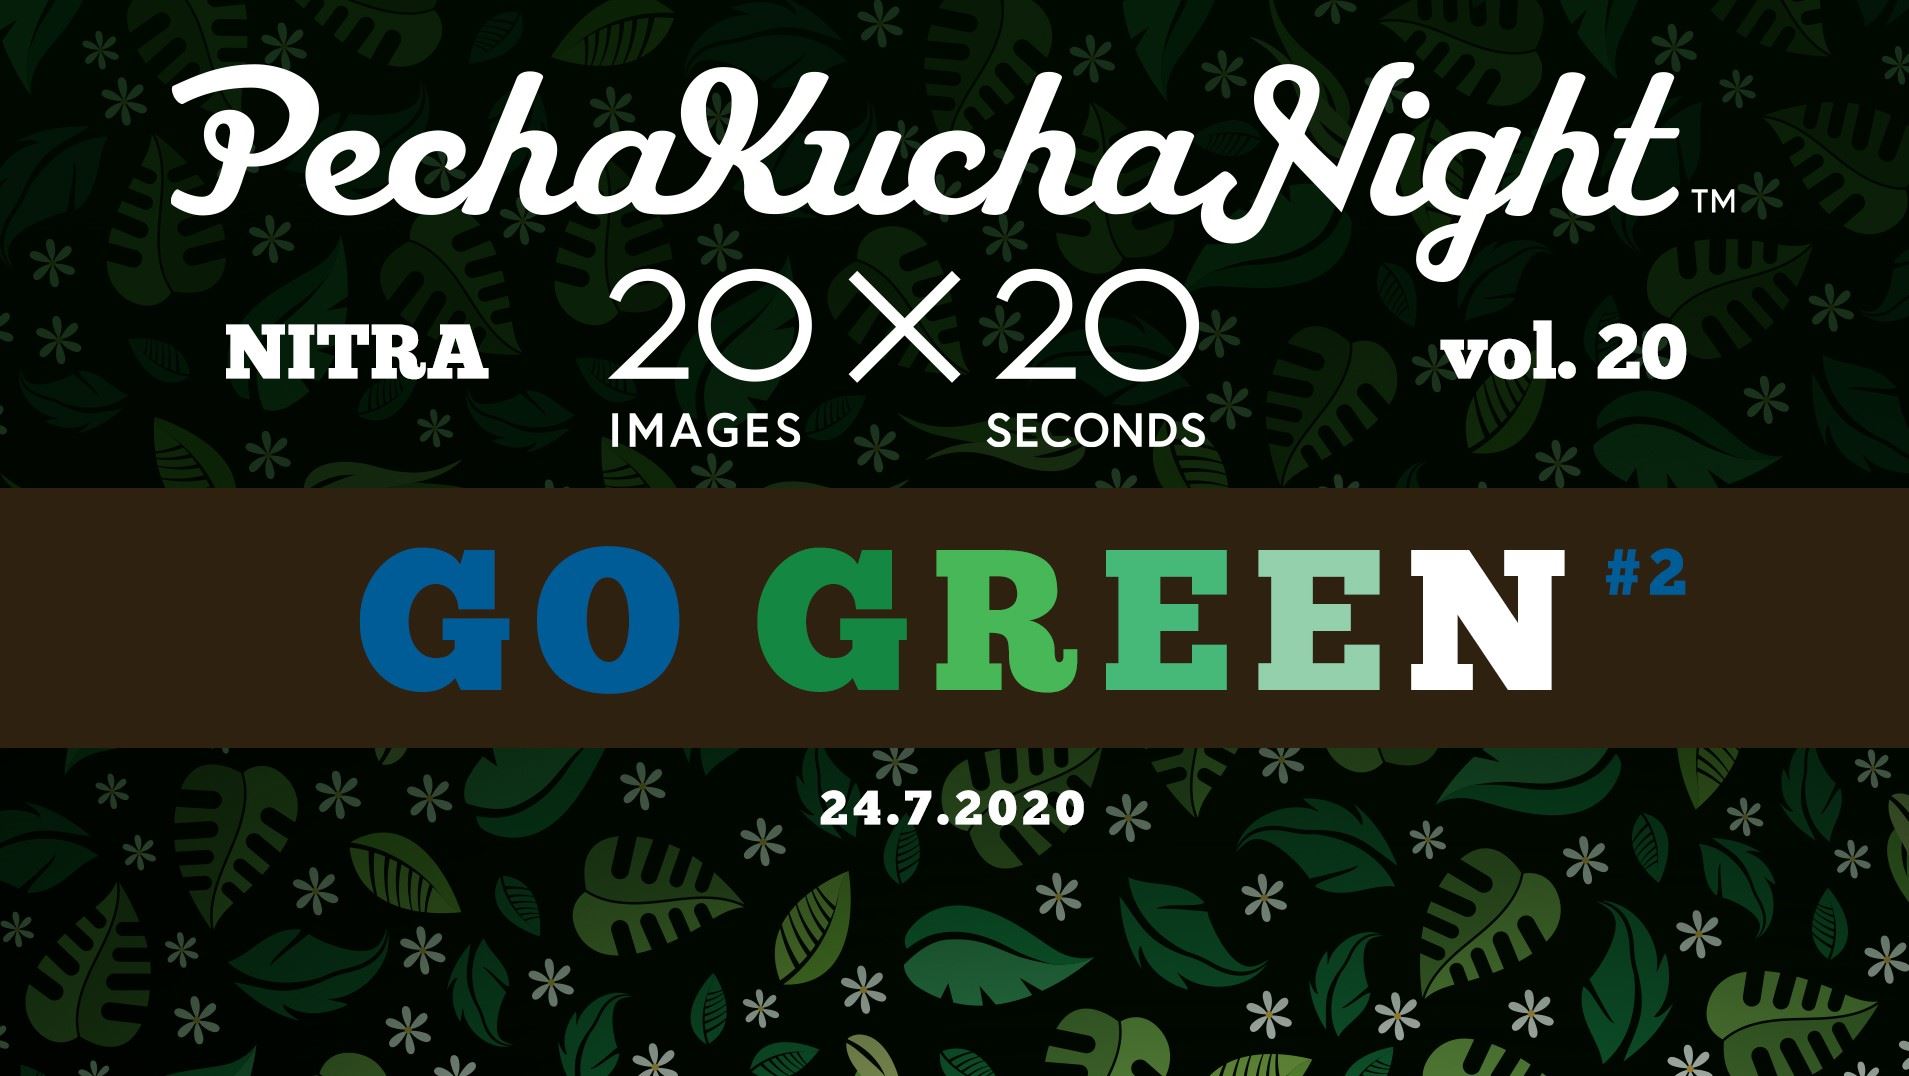 Pecha Kucha Night Nitra vol. 20: Go green #2 Hidepark Nitra